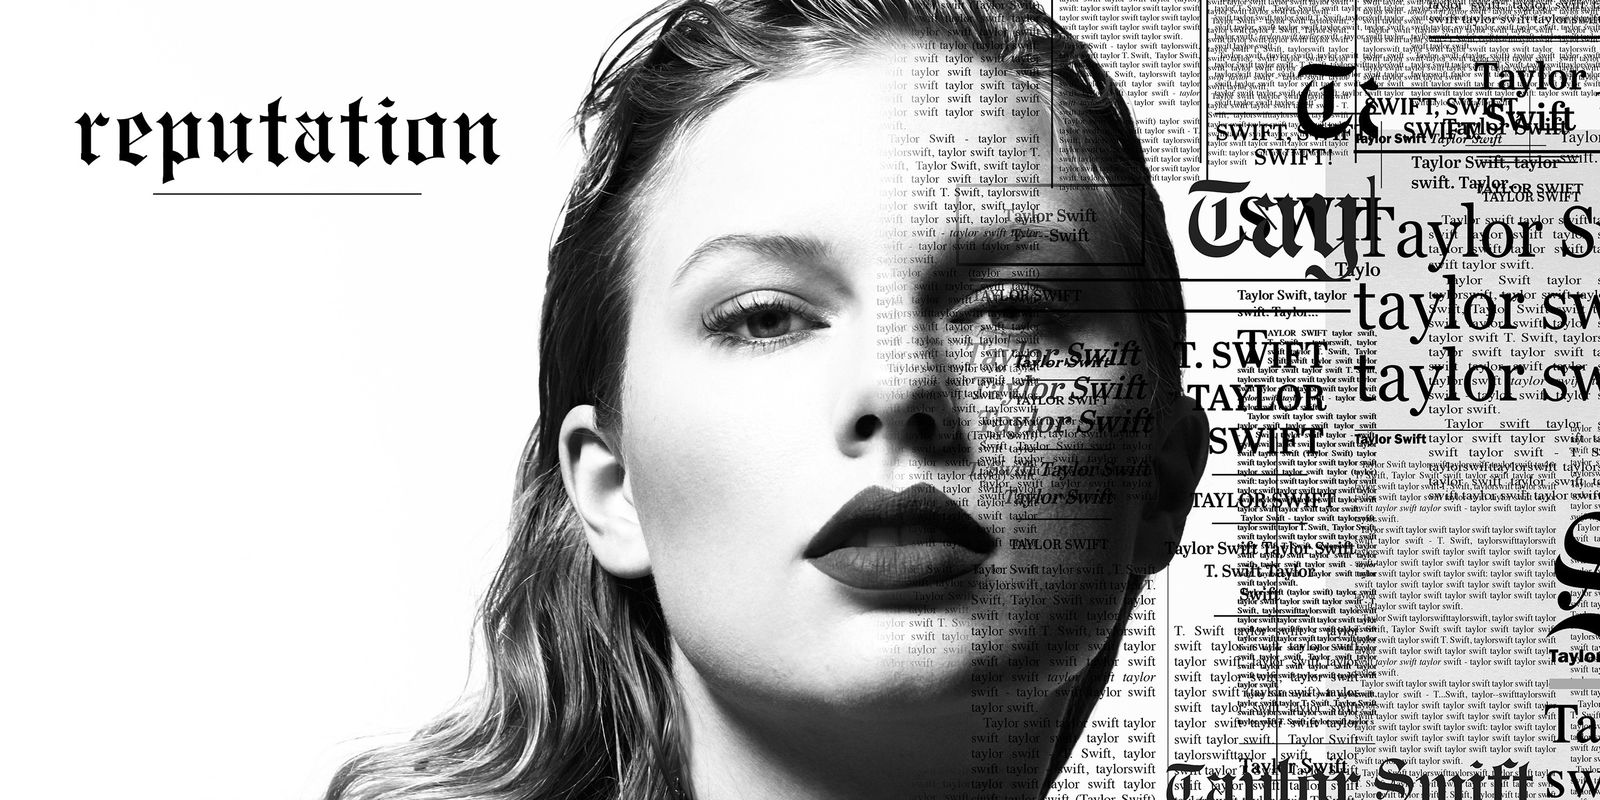 Taylor Swift announces Australian tour, while ‘Reputation’ album hits streaming services